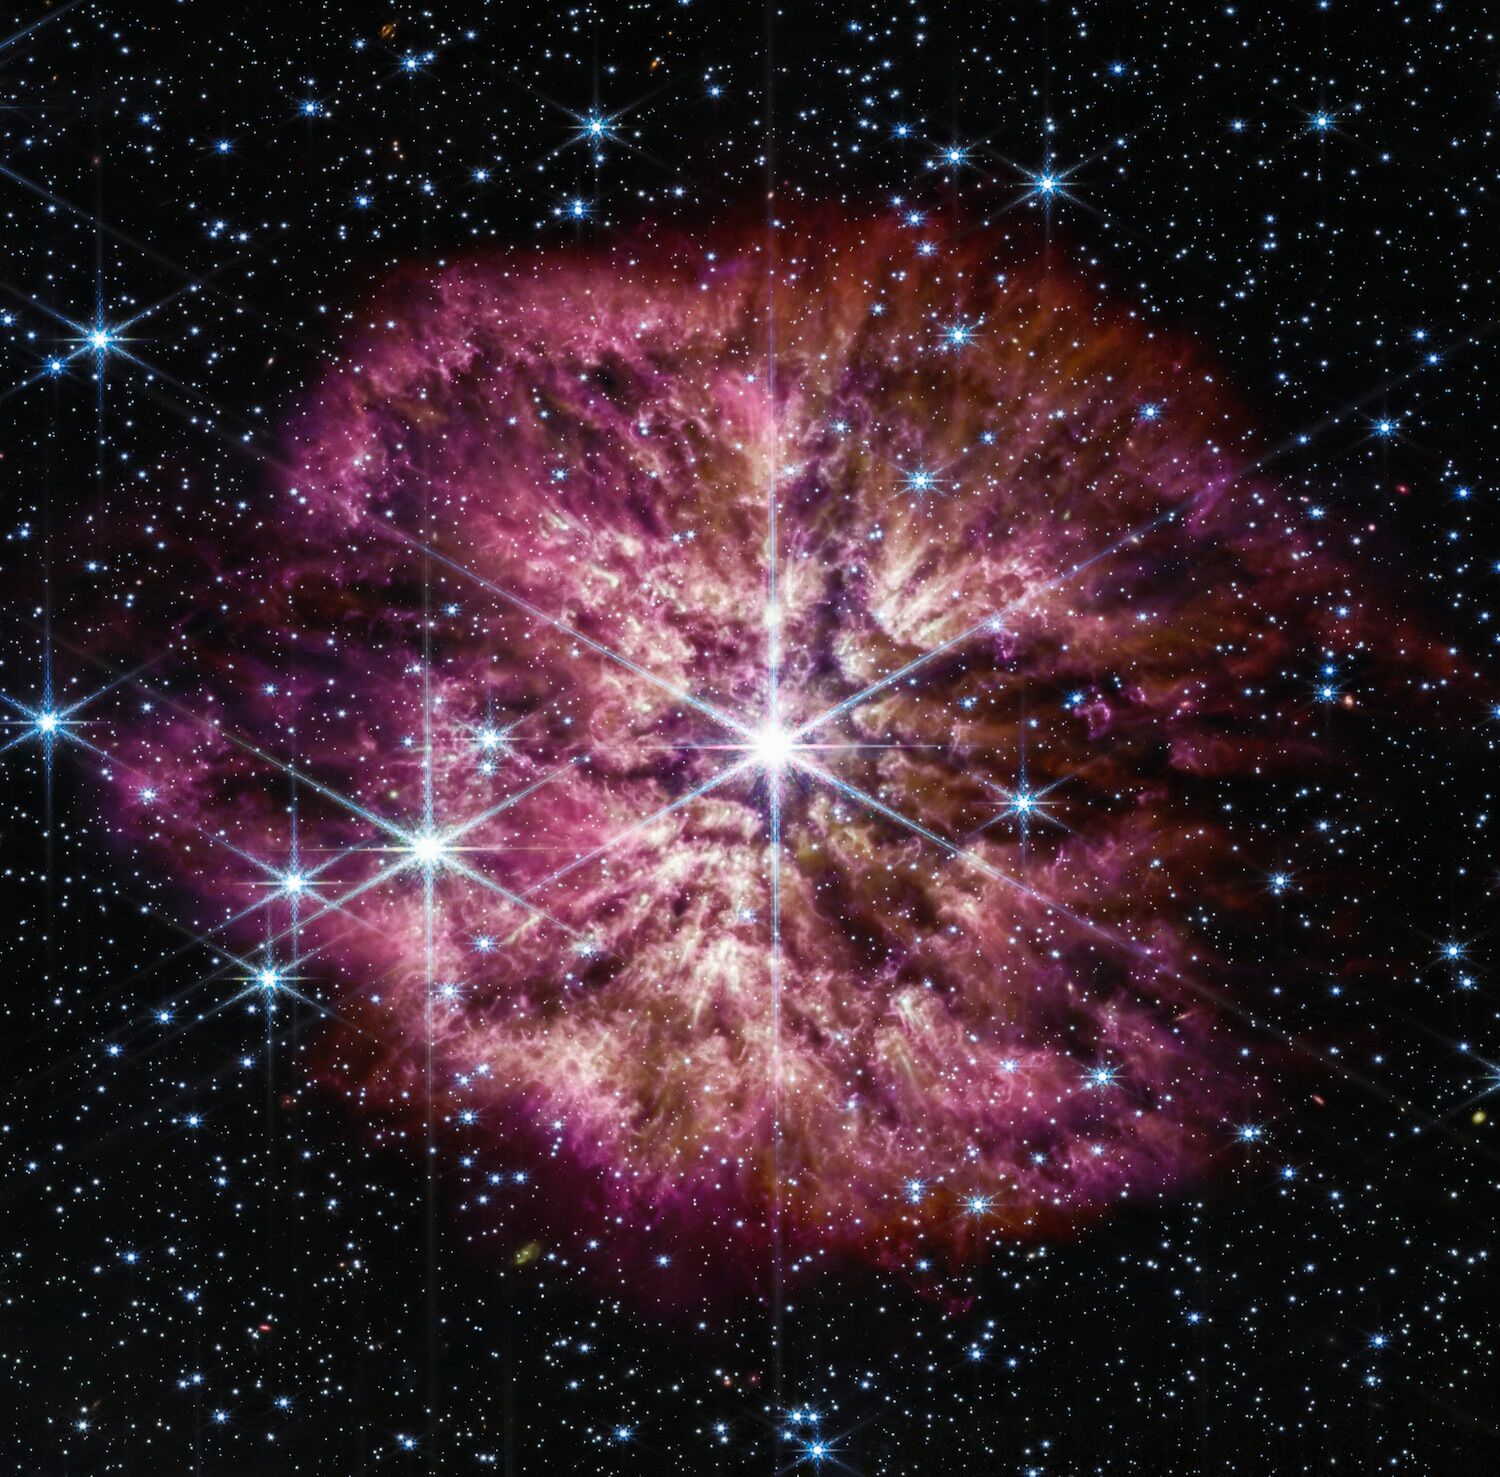 Aquí hay una mirada rara al precursor del famoso acto final de una estrella masiva: la supernova.